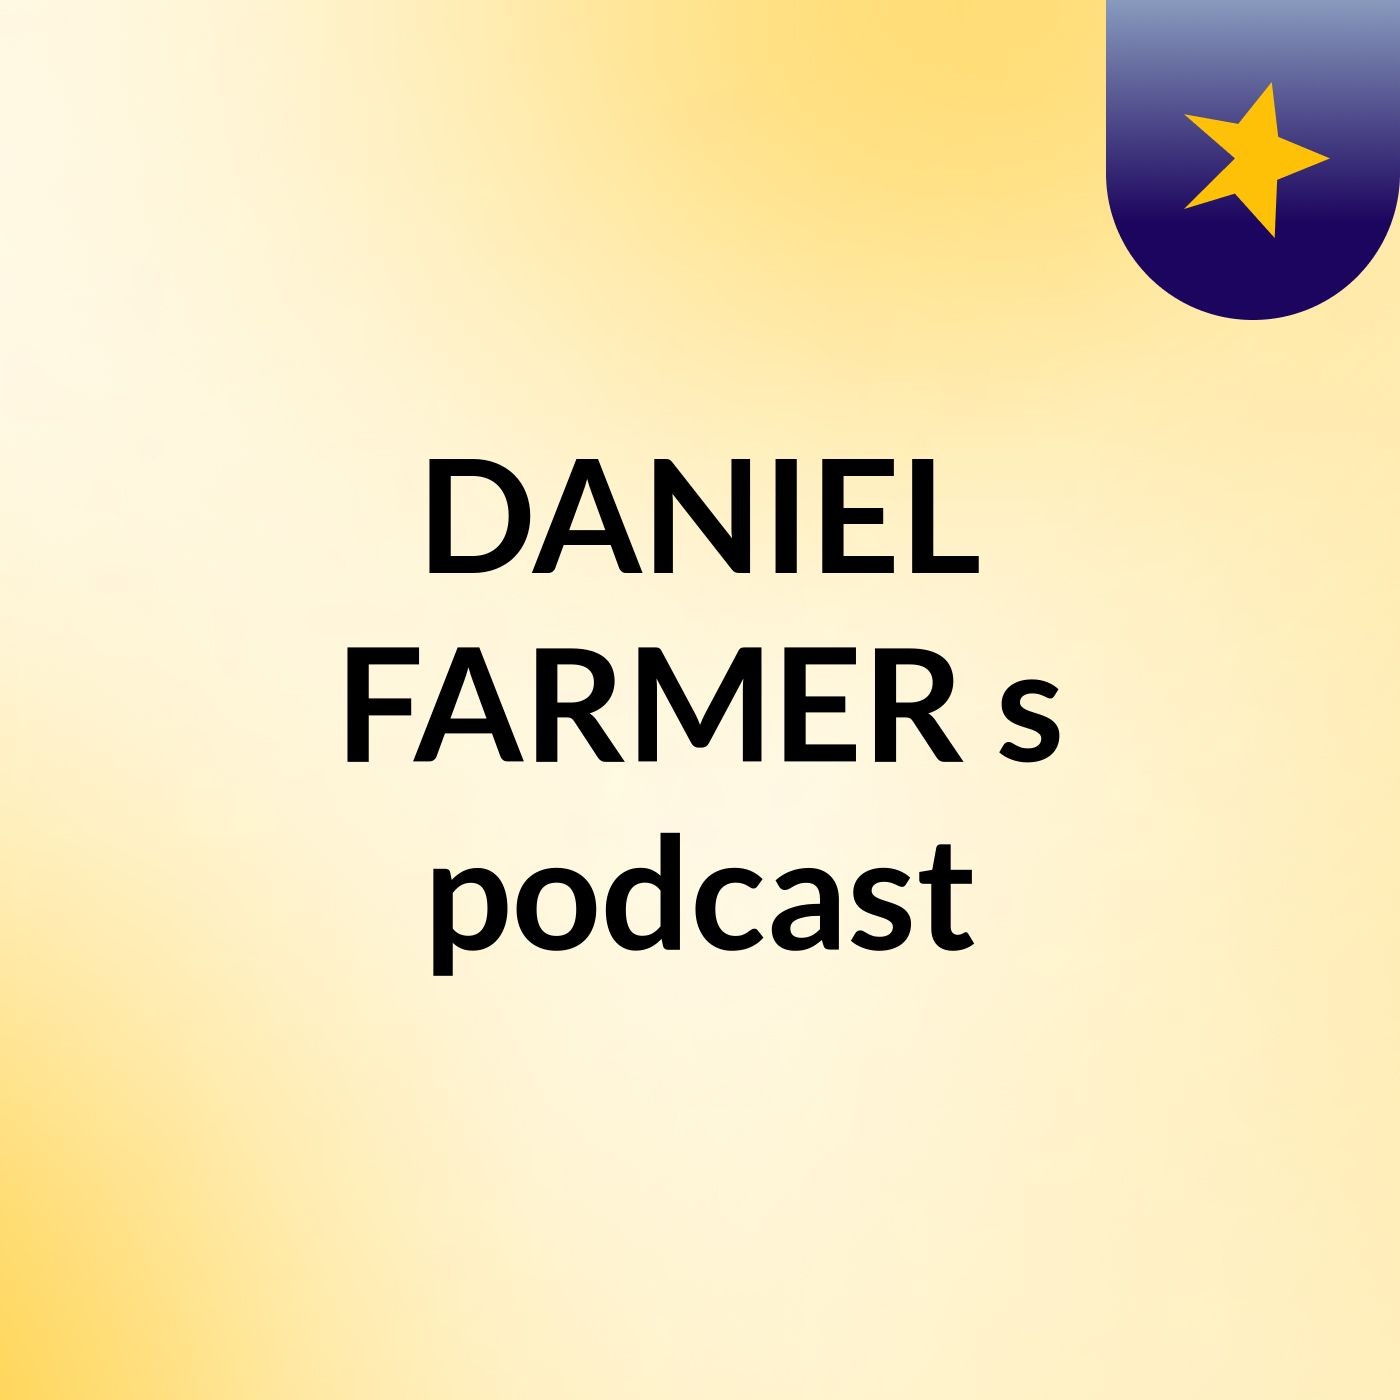 Episode 3 - DANIEL FARMER's podcast